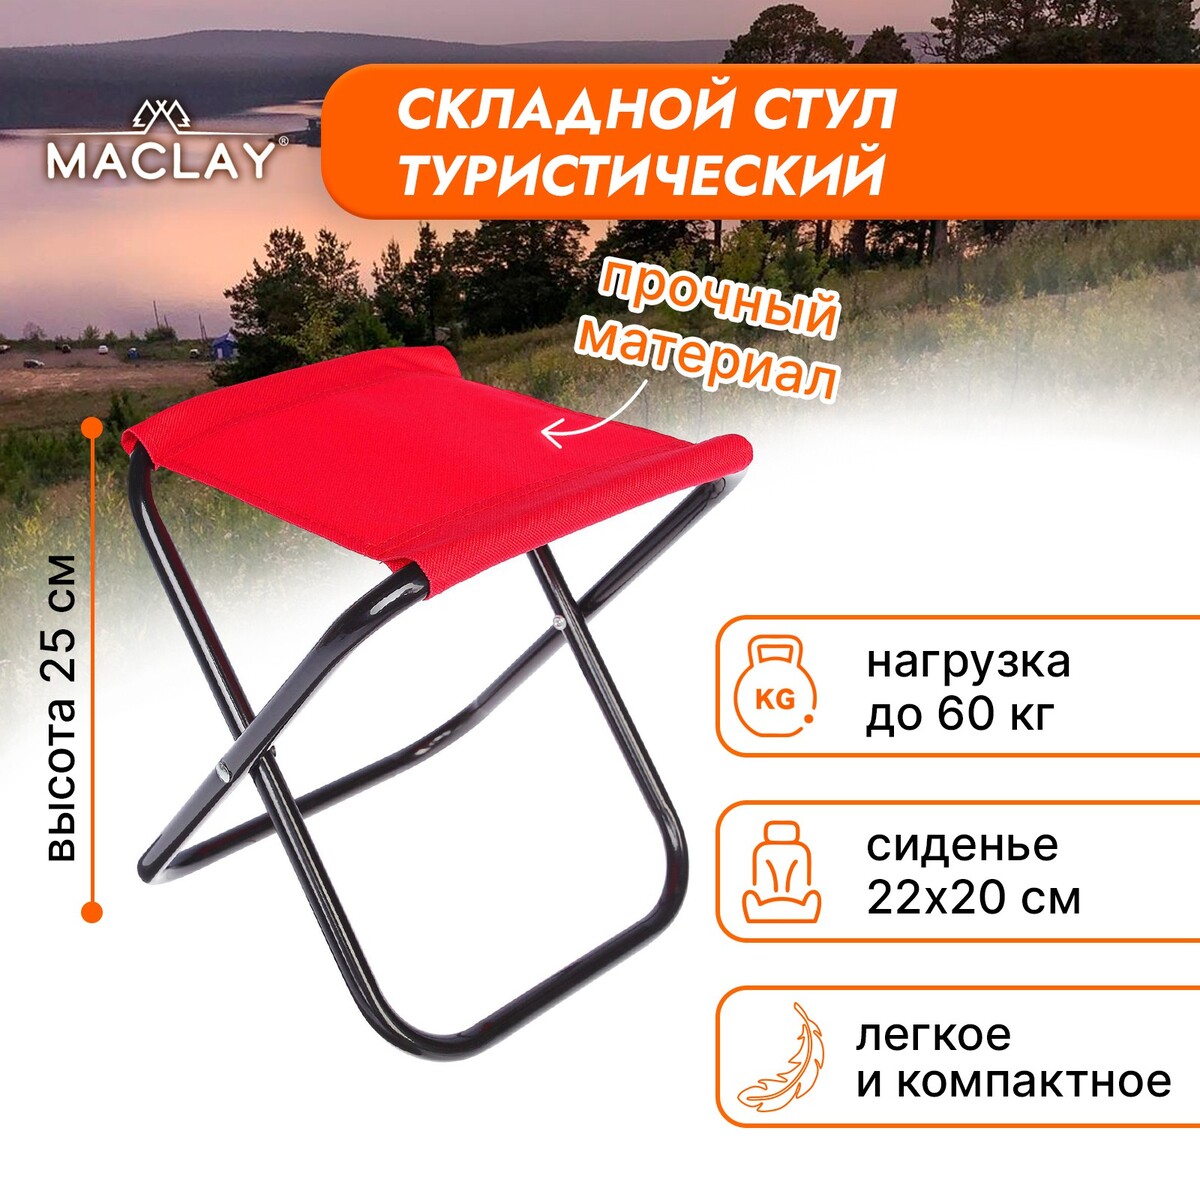 Стул туристический maclay, складной, р. 22х20х25 см, цвет красный стул туристический maclay складной р 22х20х25 см серый